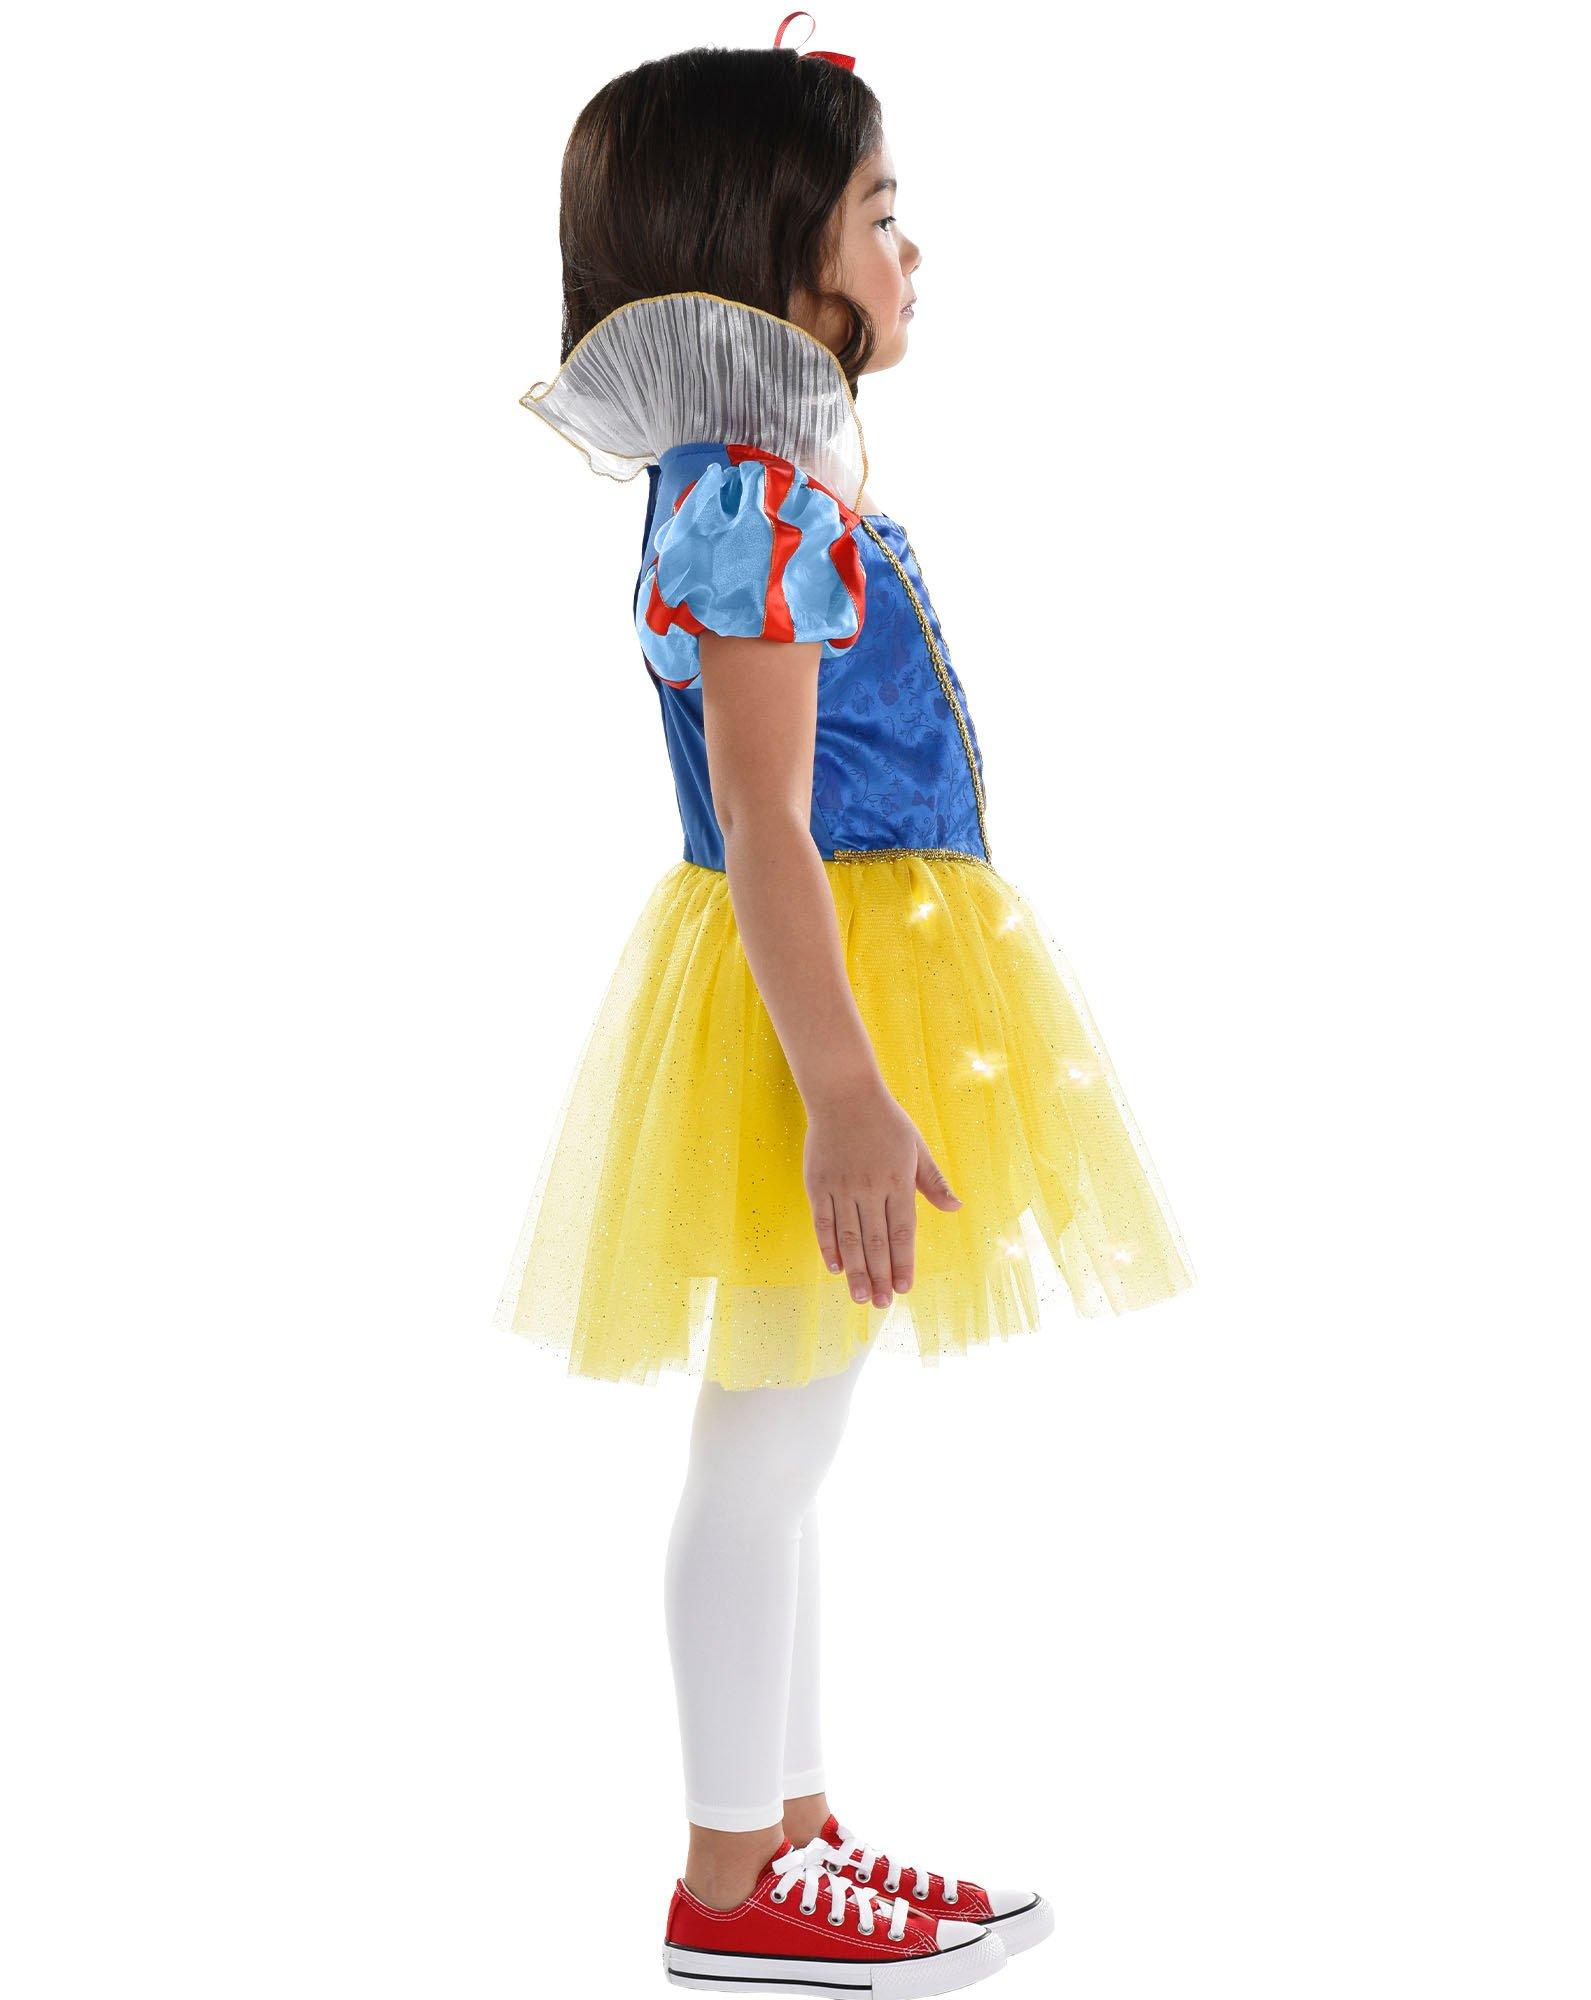 Kids' Light-Up Snow White Costume - Disney Snow White & The Seven